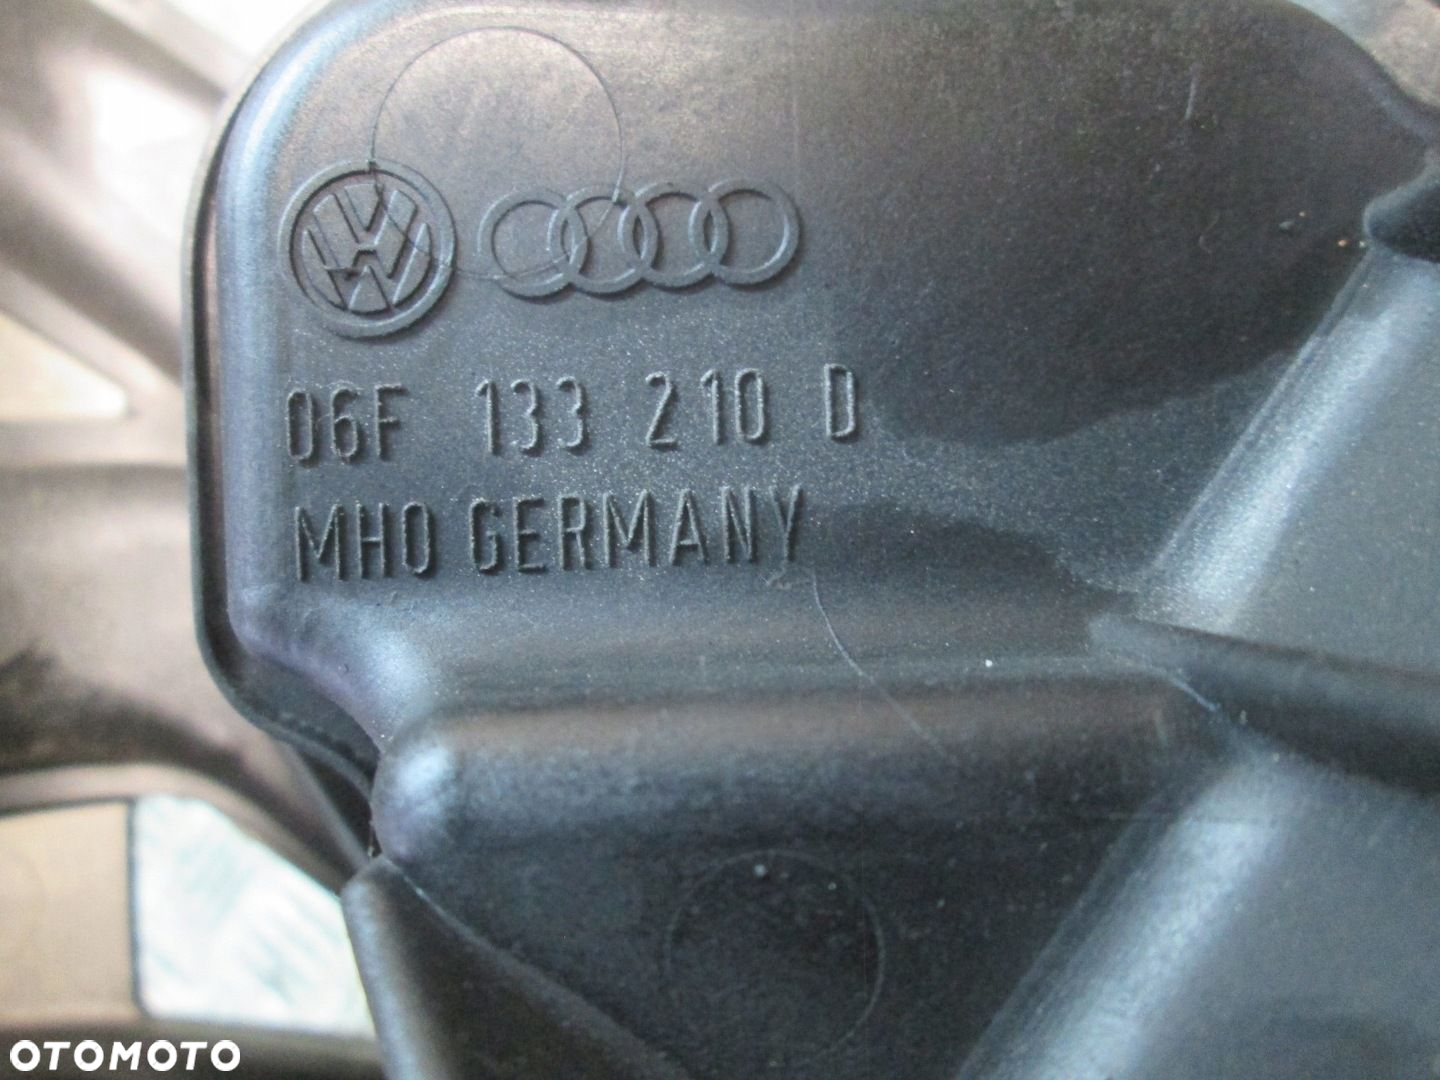 KOLEKTOR SSĄCY VW SEAT AUDI A3 8P 2.0 FSI 06F133210D - 4